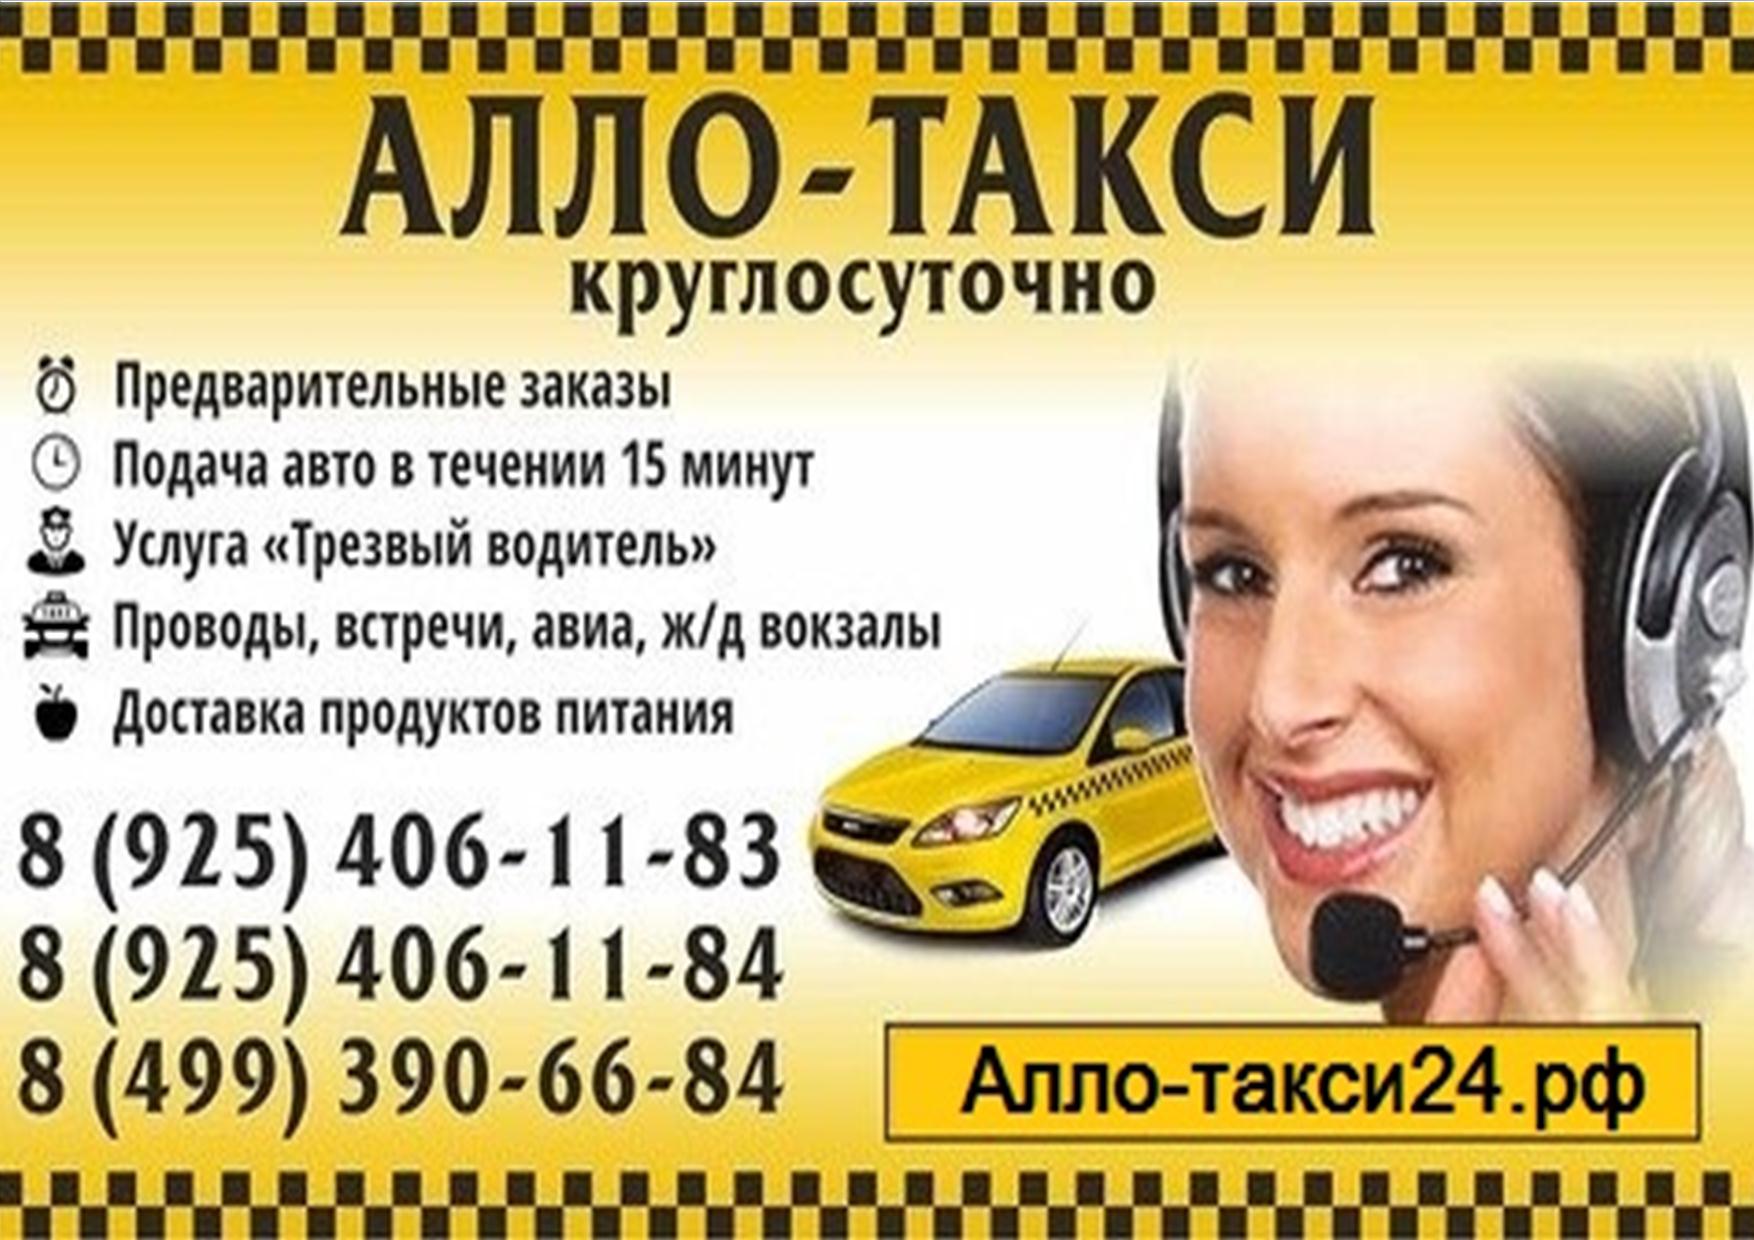 Такси город екатеринбург телефон. Реклама такси. Объявление такси. Визитка такси. Таксист реклама.